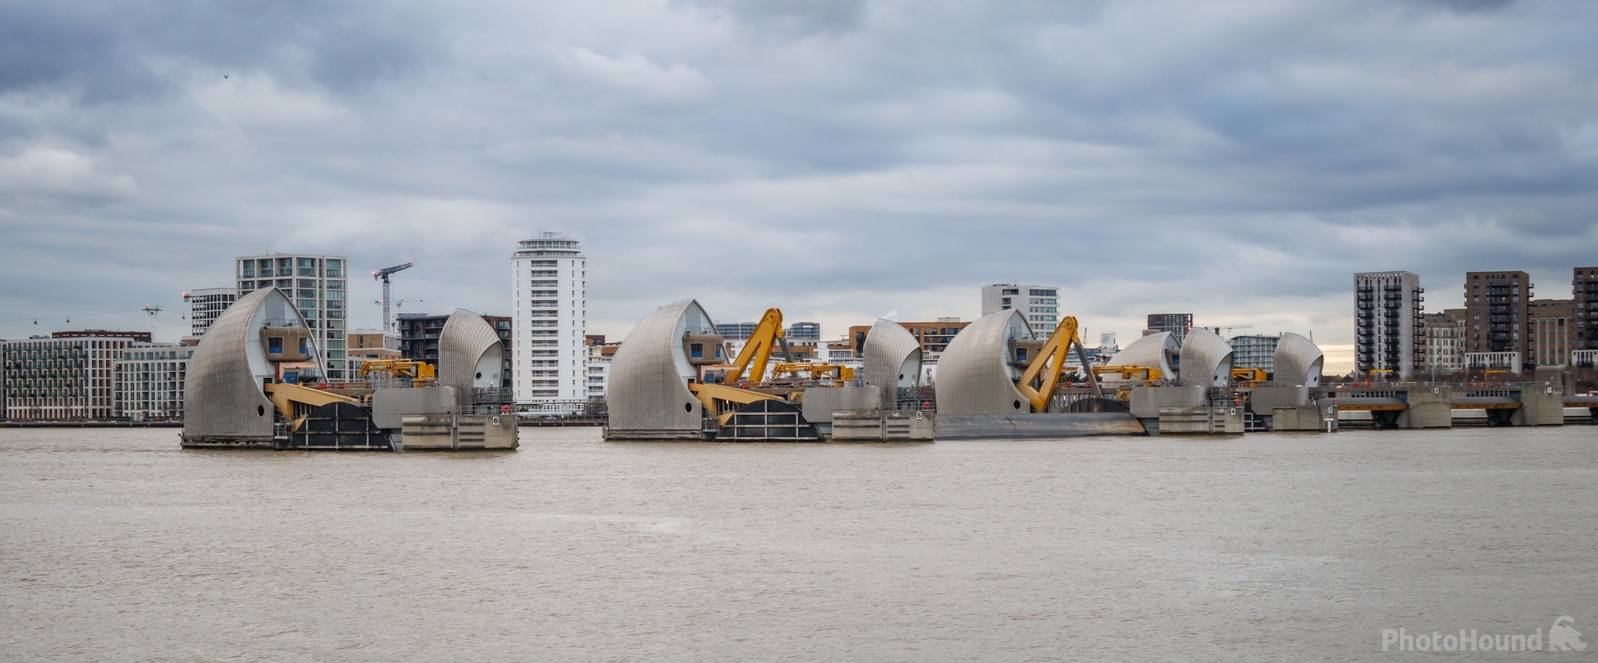 Image of Thames Barrier by Richard Joiner